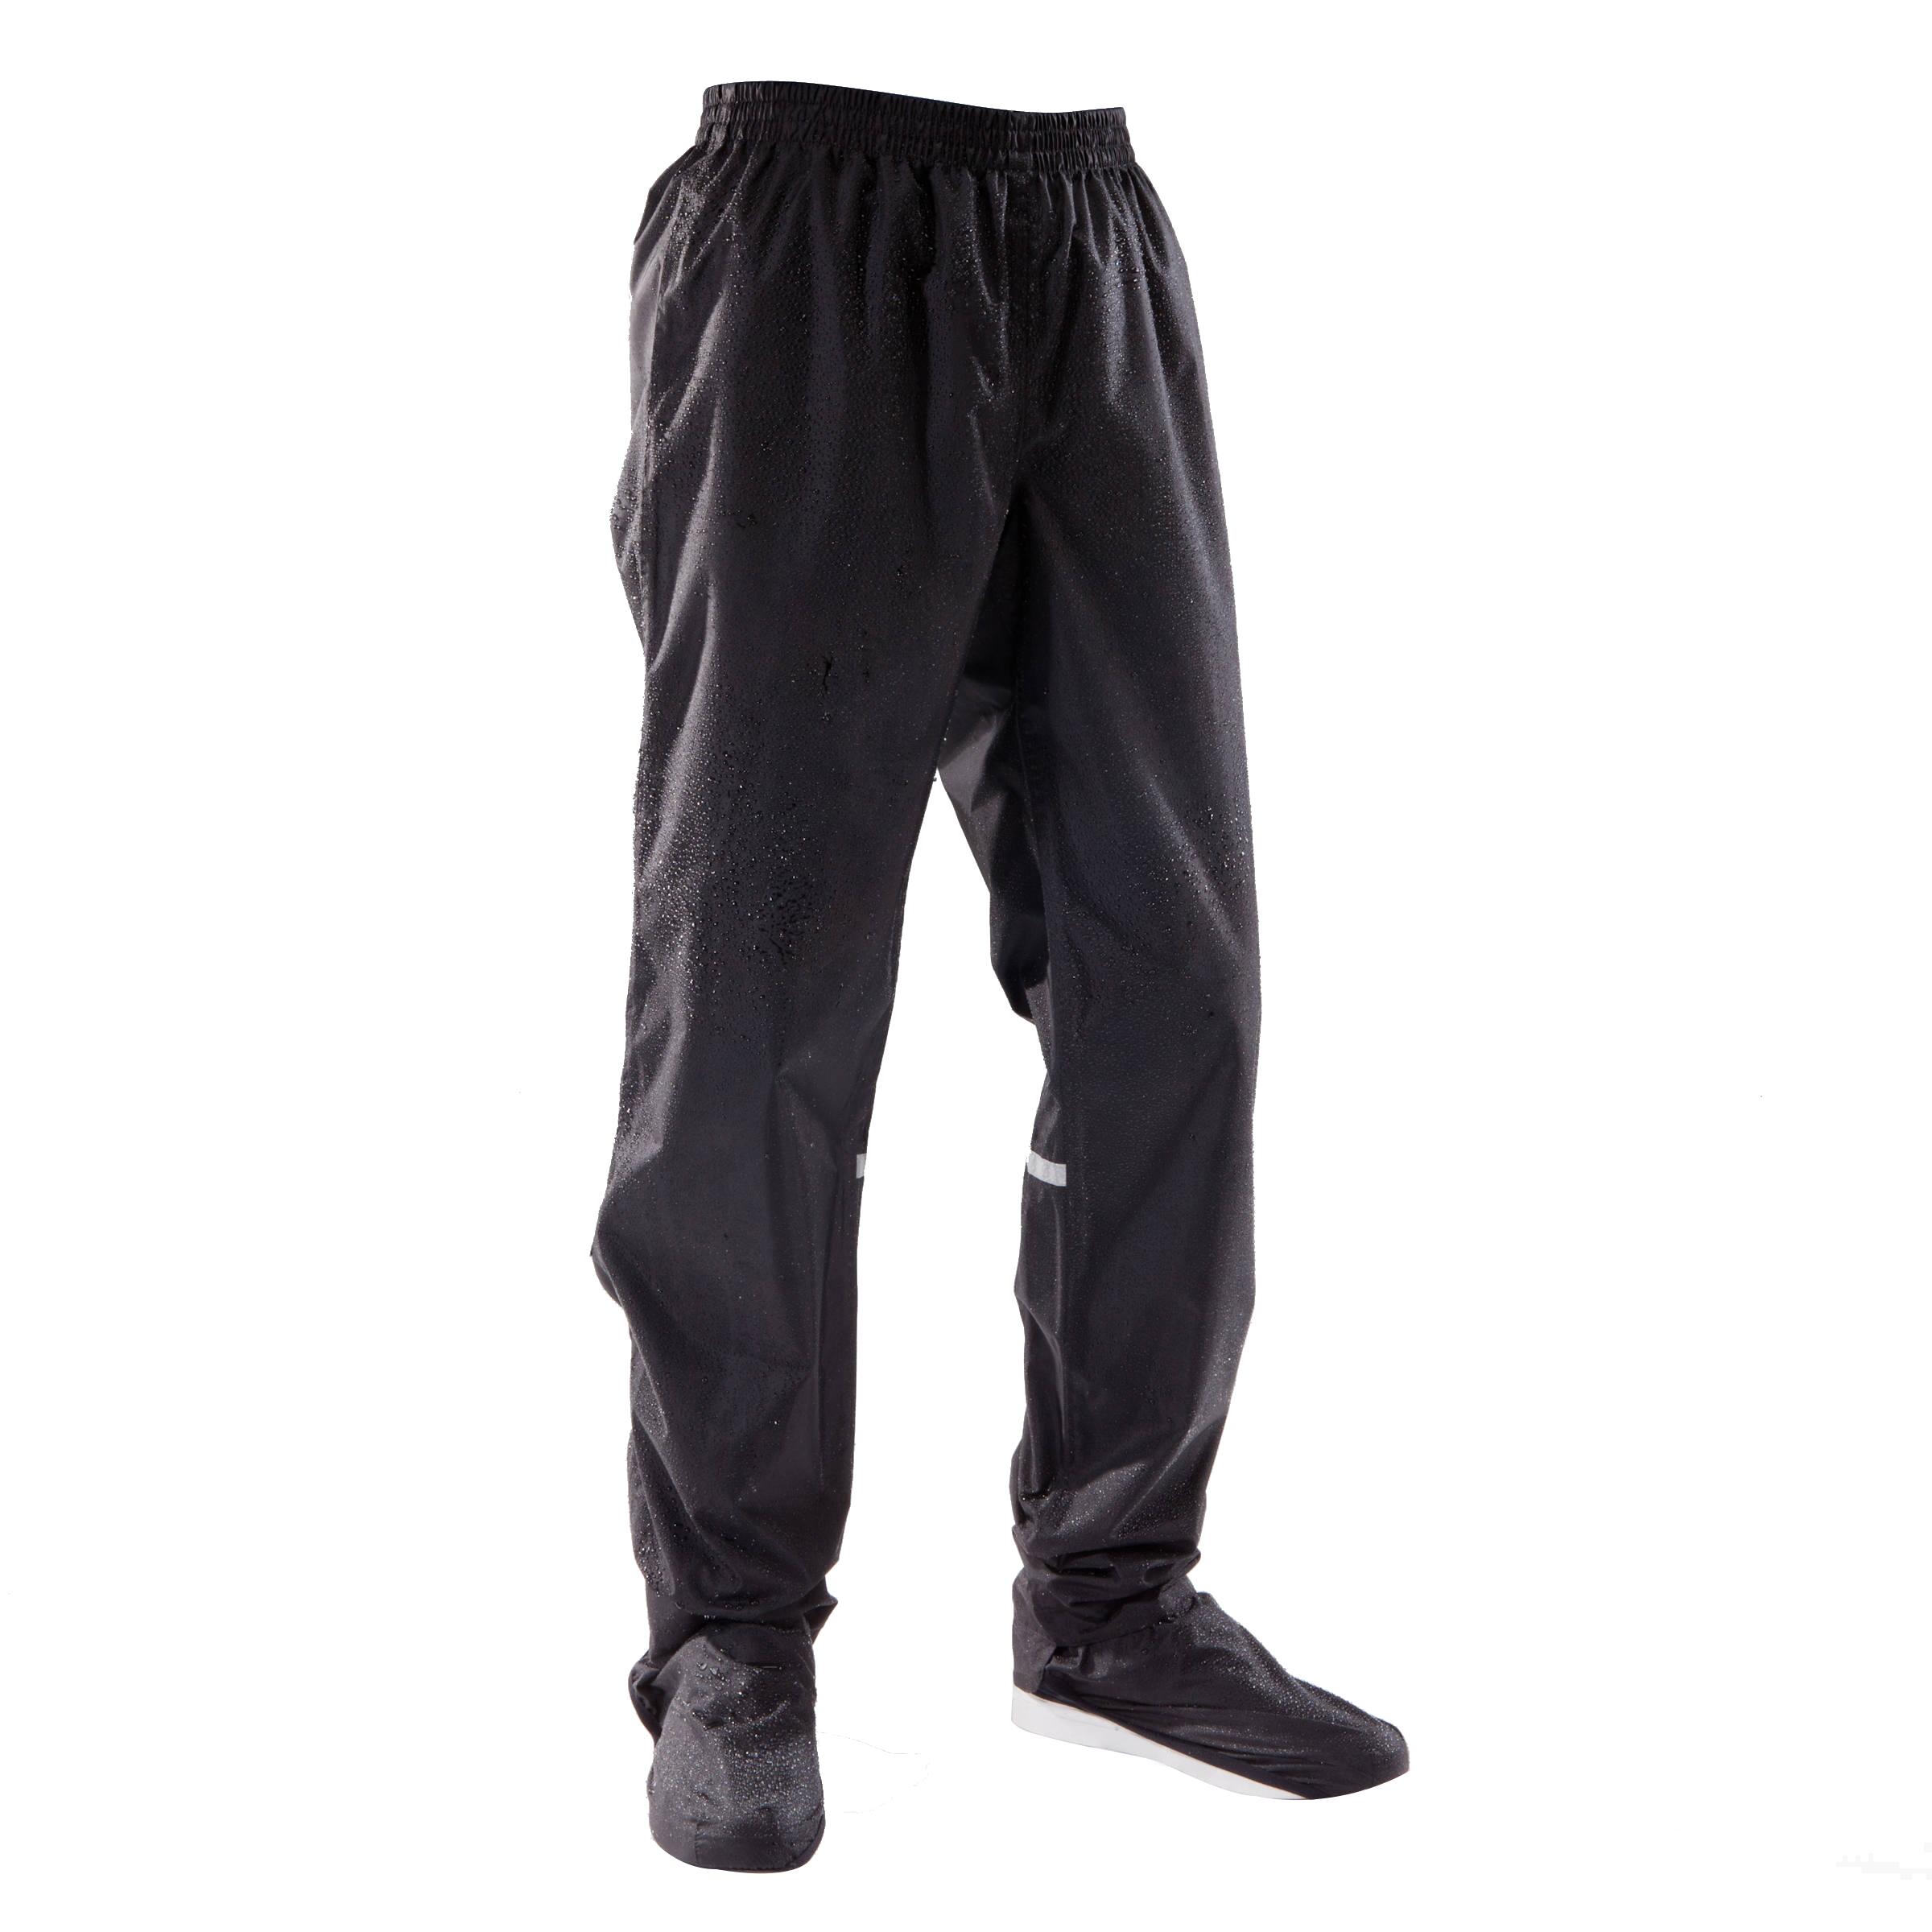 Buy Men's Rain Pants Hiking Overtrousers Navy Blue Online | Decathlon